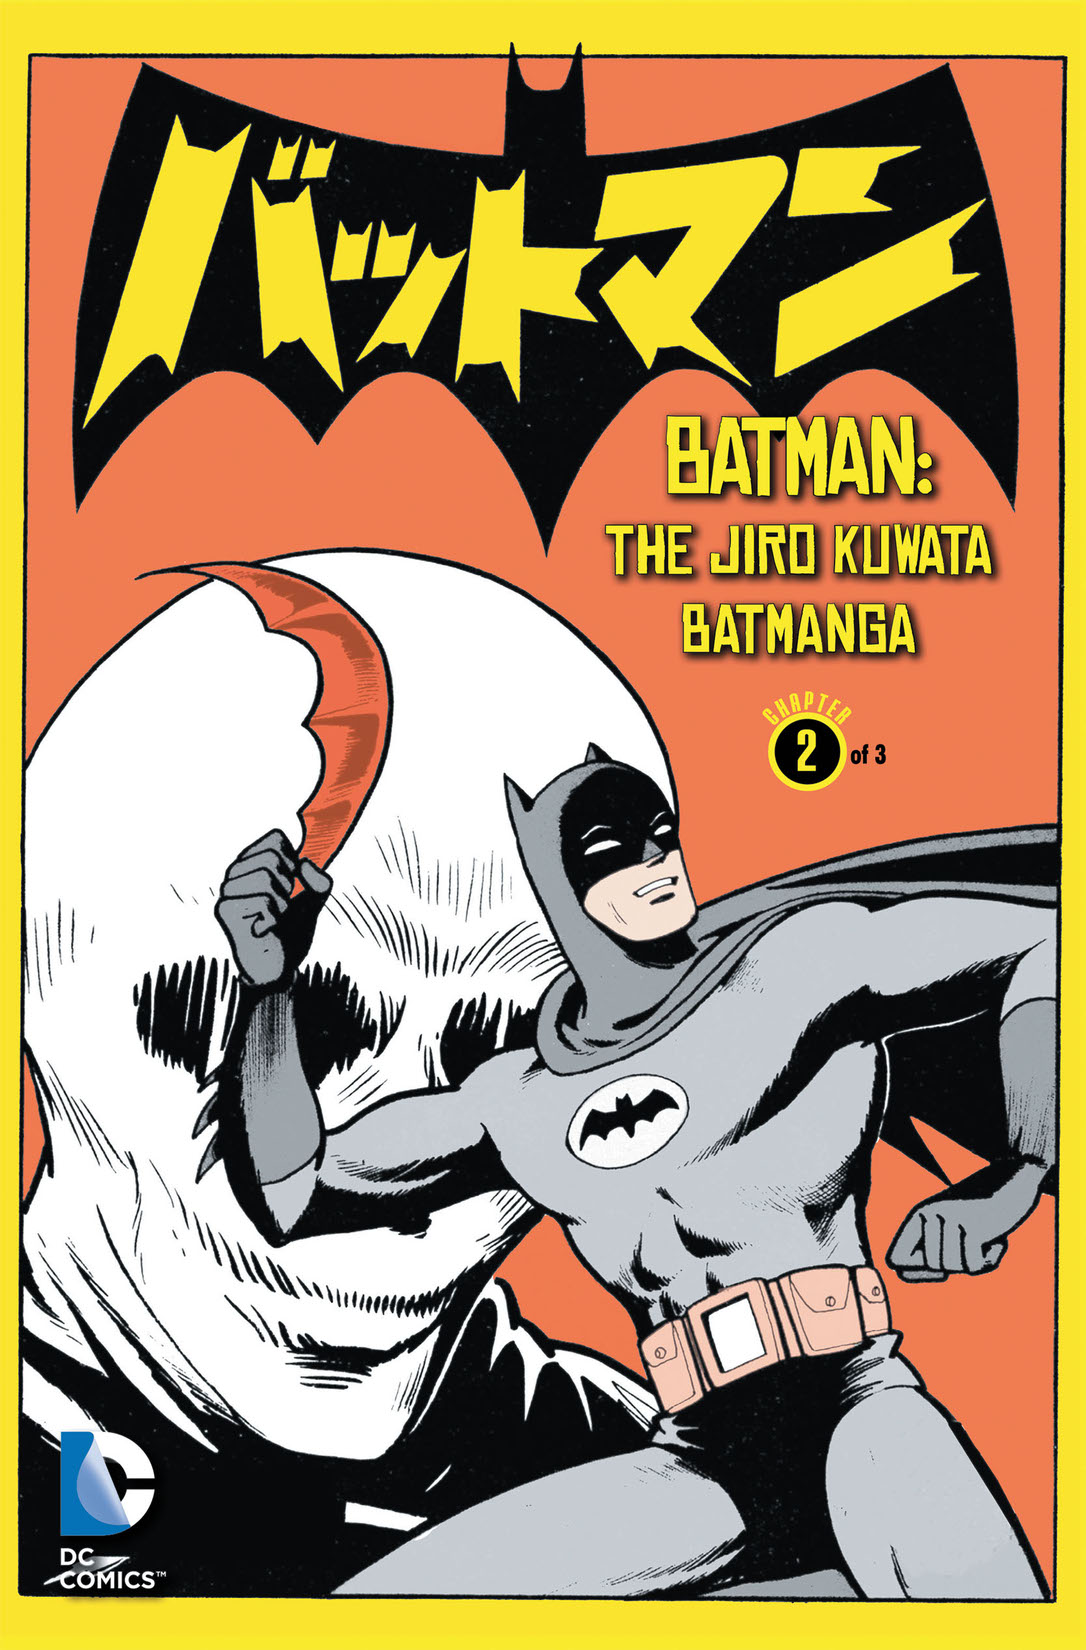 Batman: The Jiro Kuwata Batmanga #2 preview images